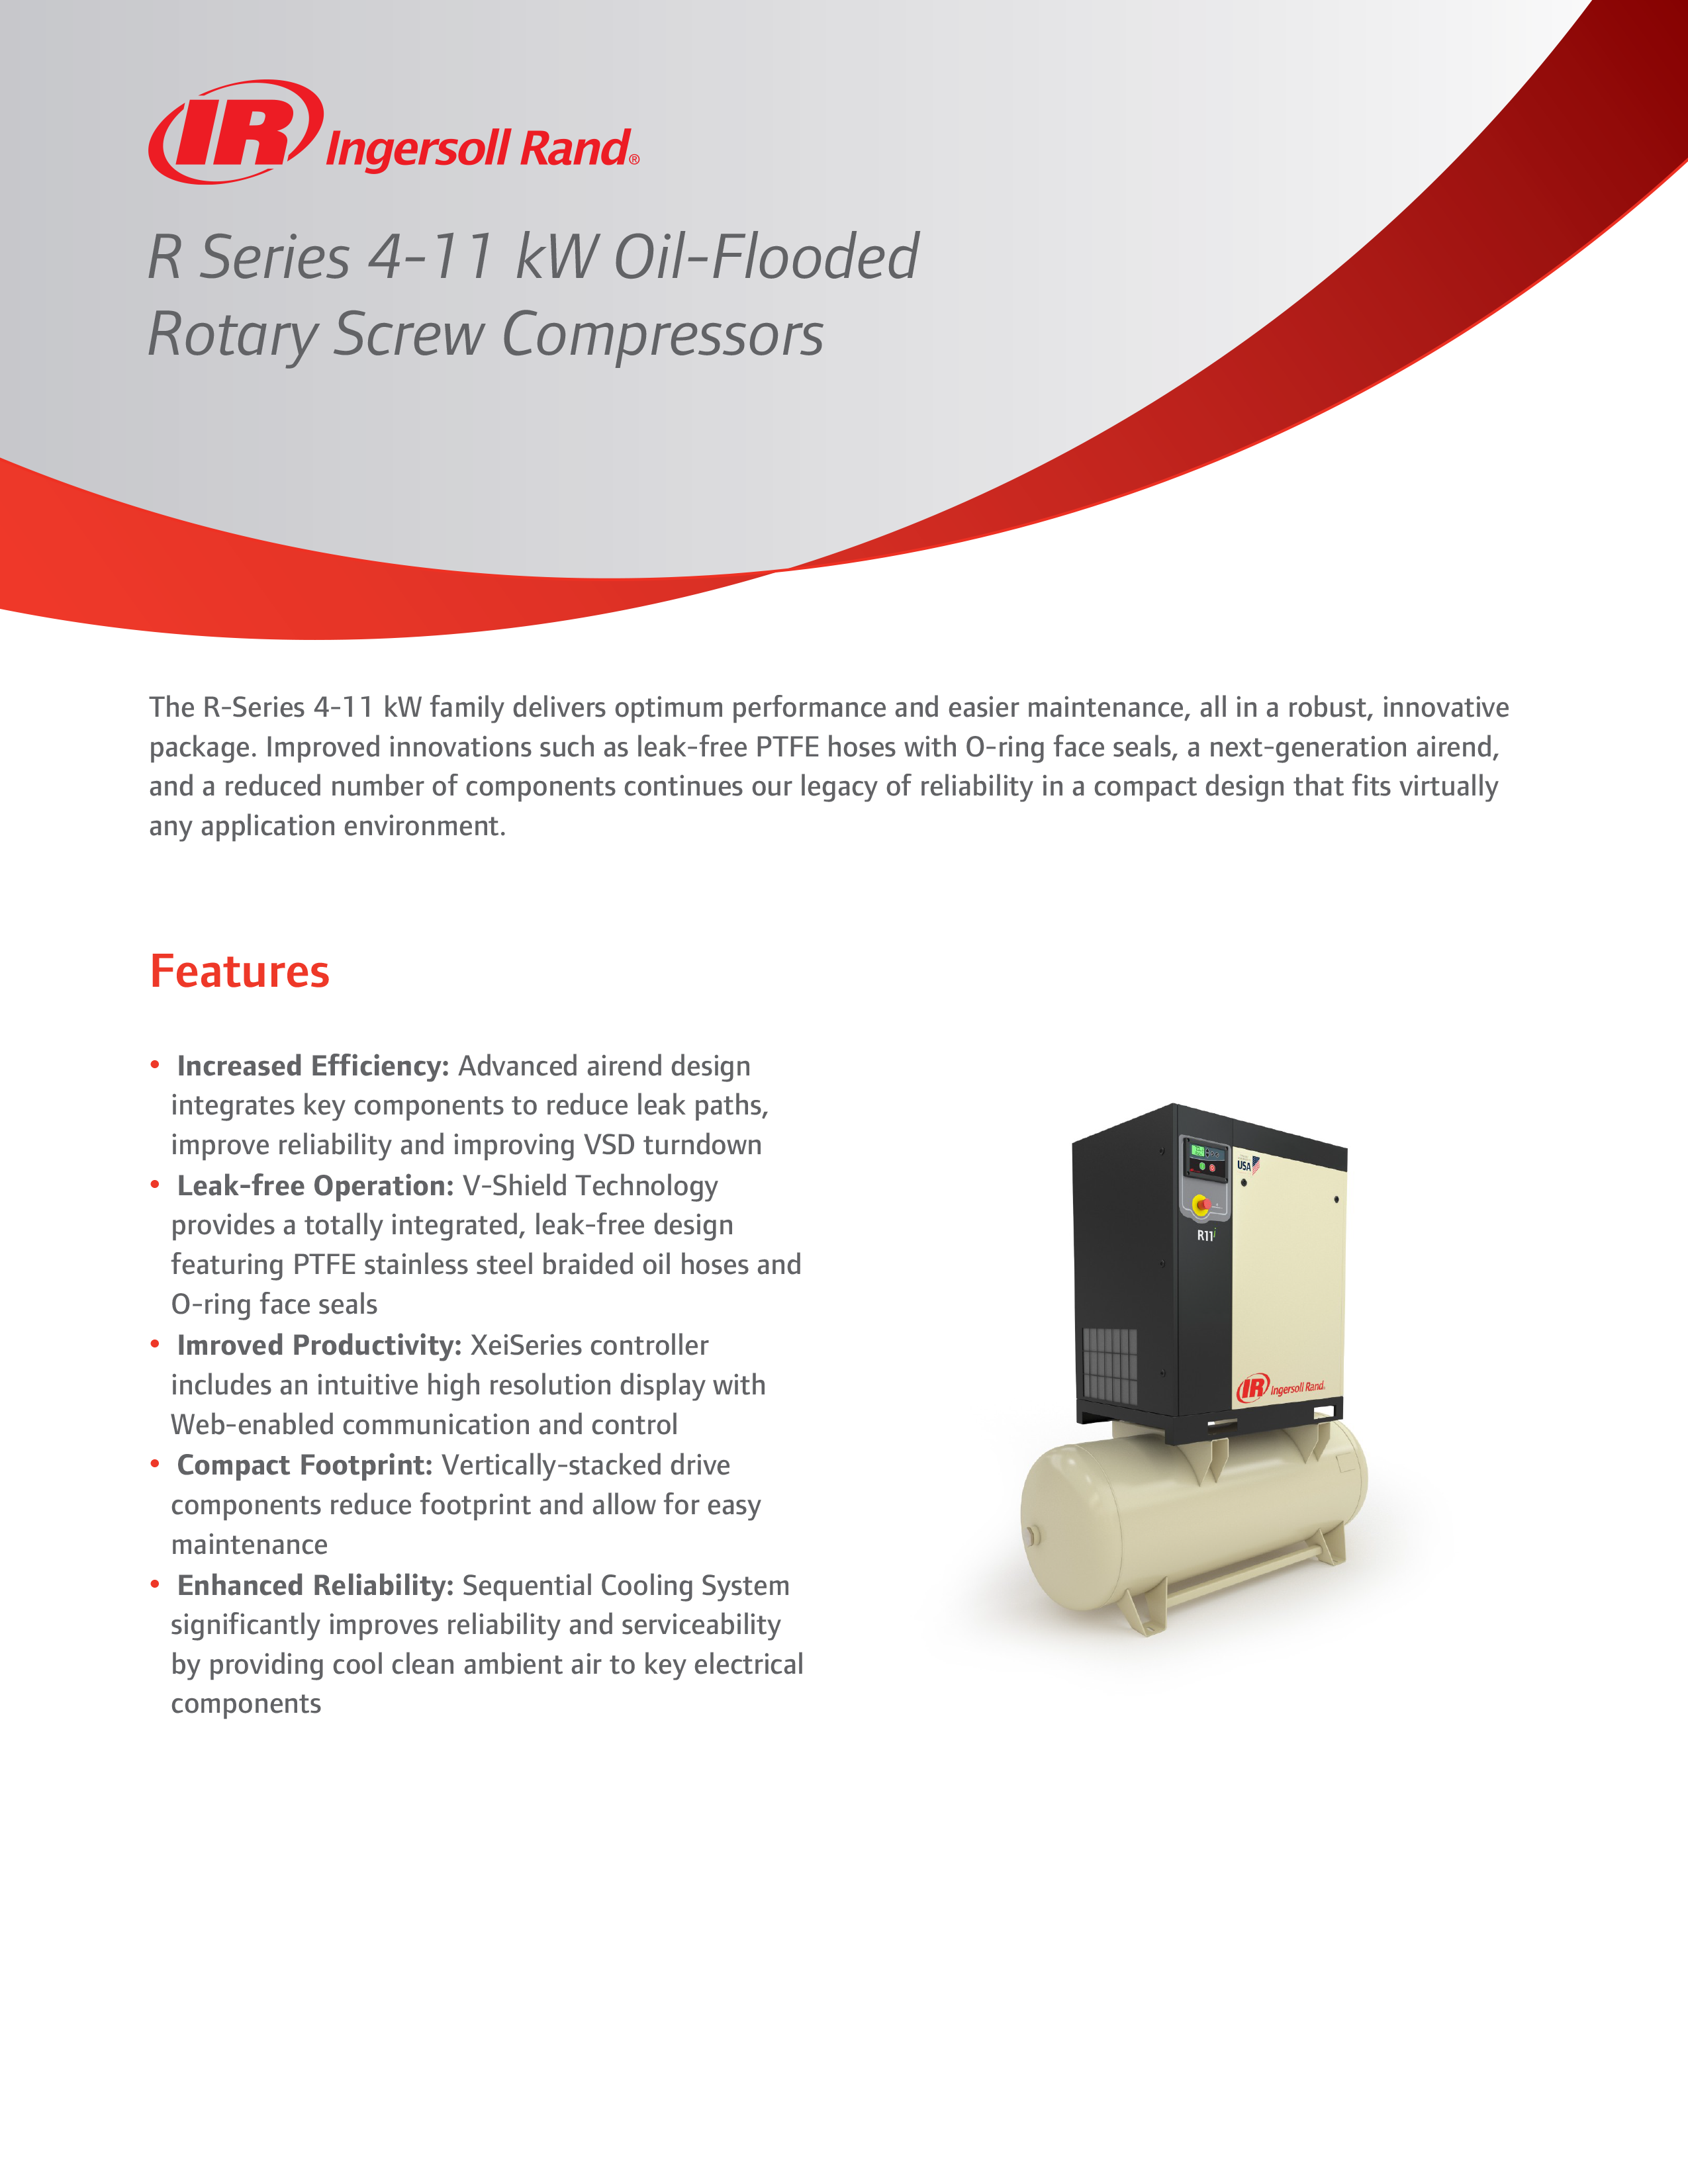 Ingersoll Rand R-Series ROTARY SCREW